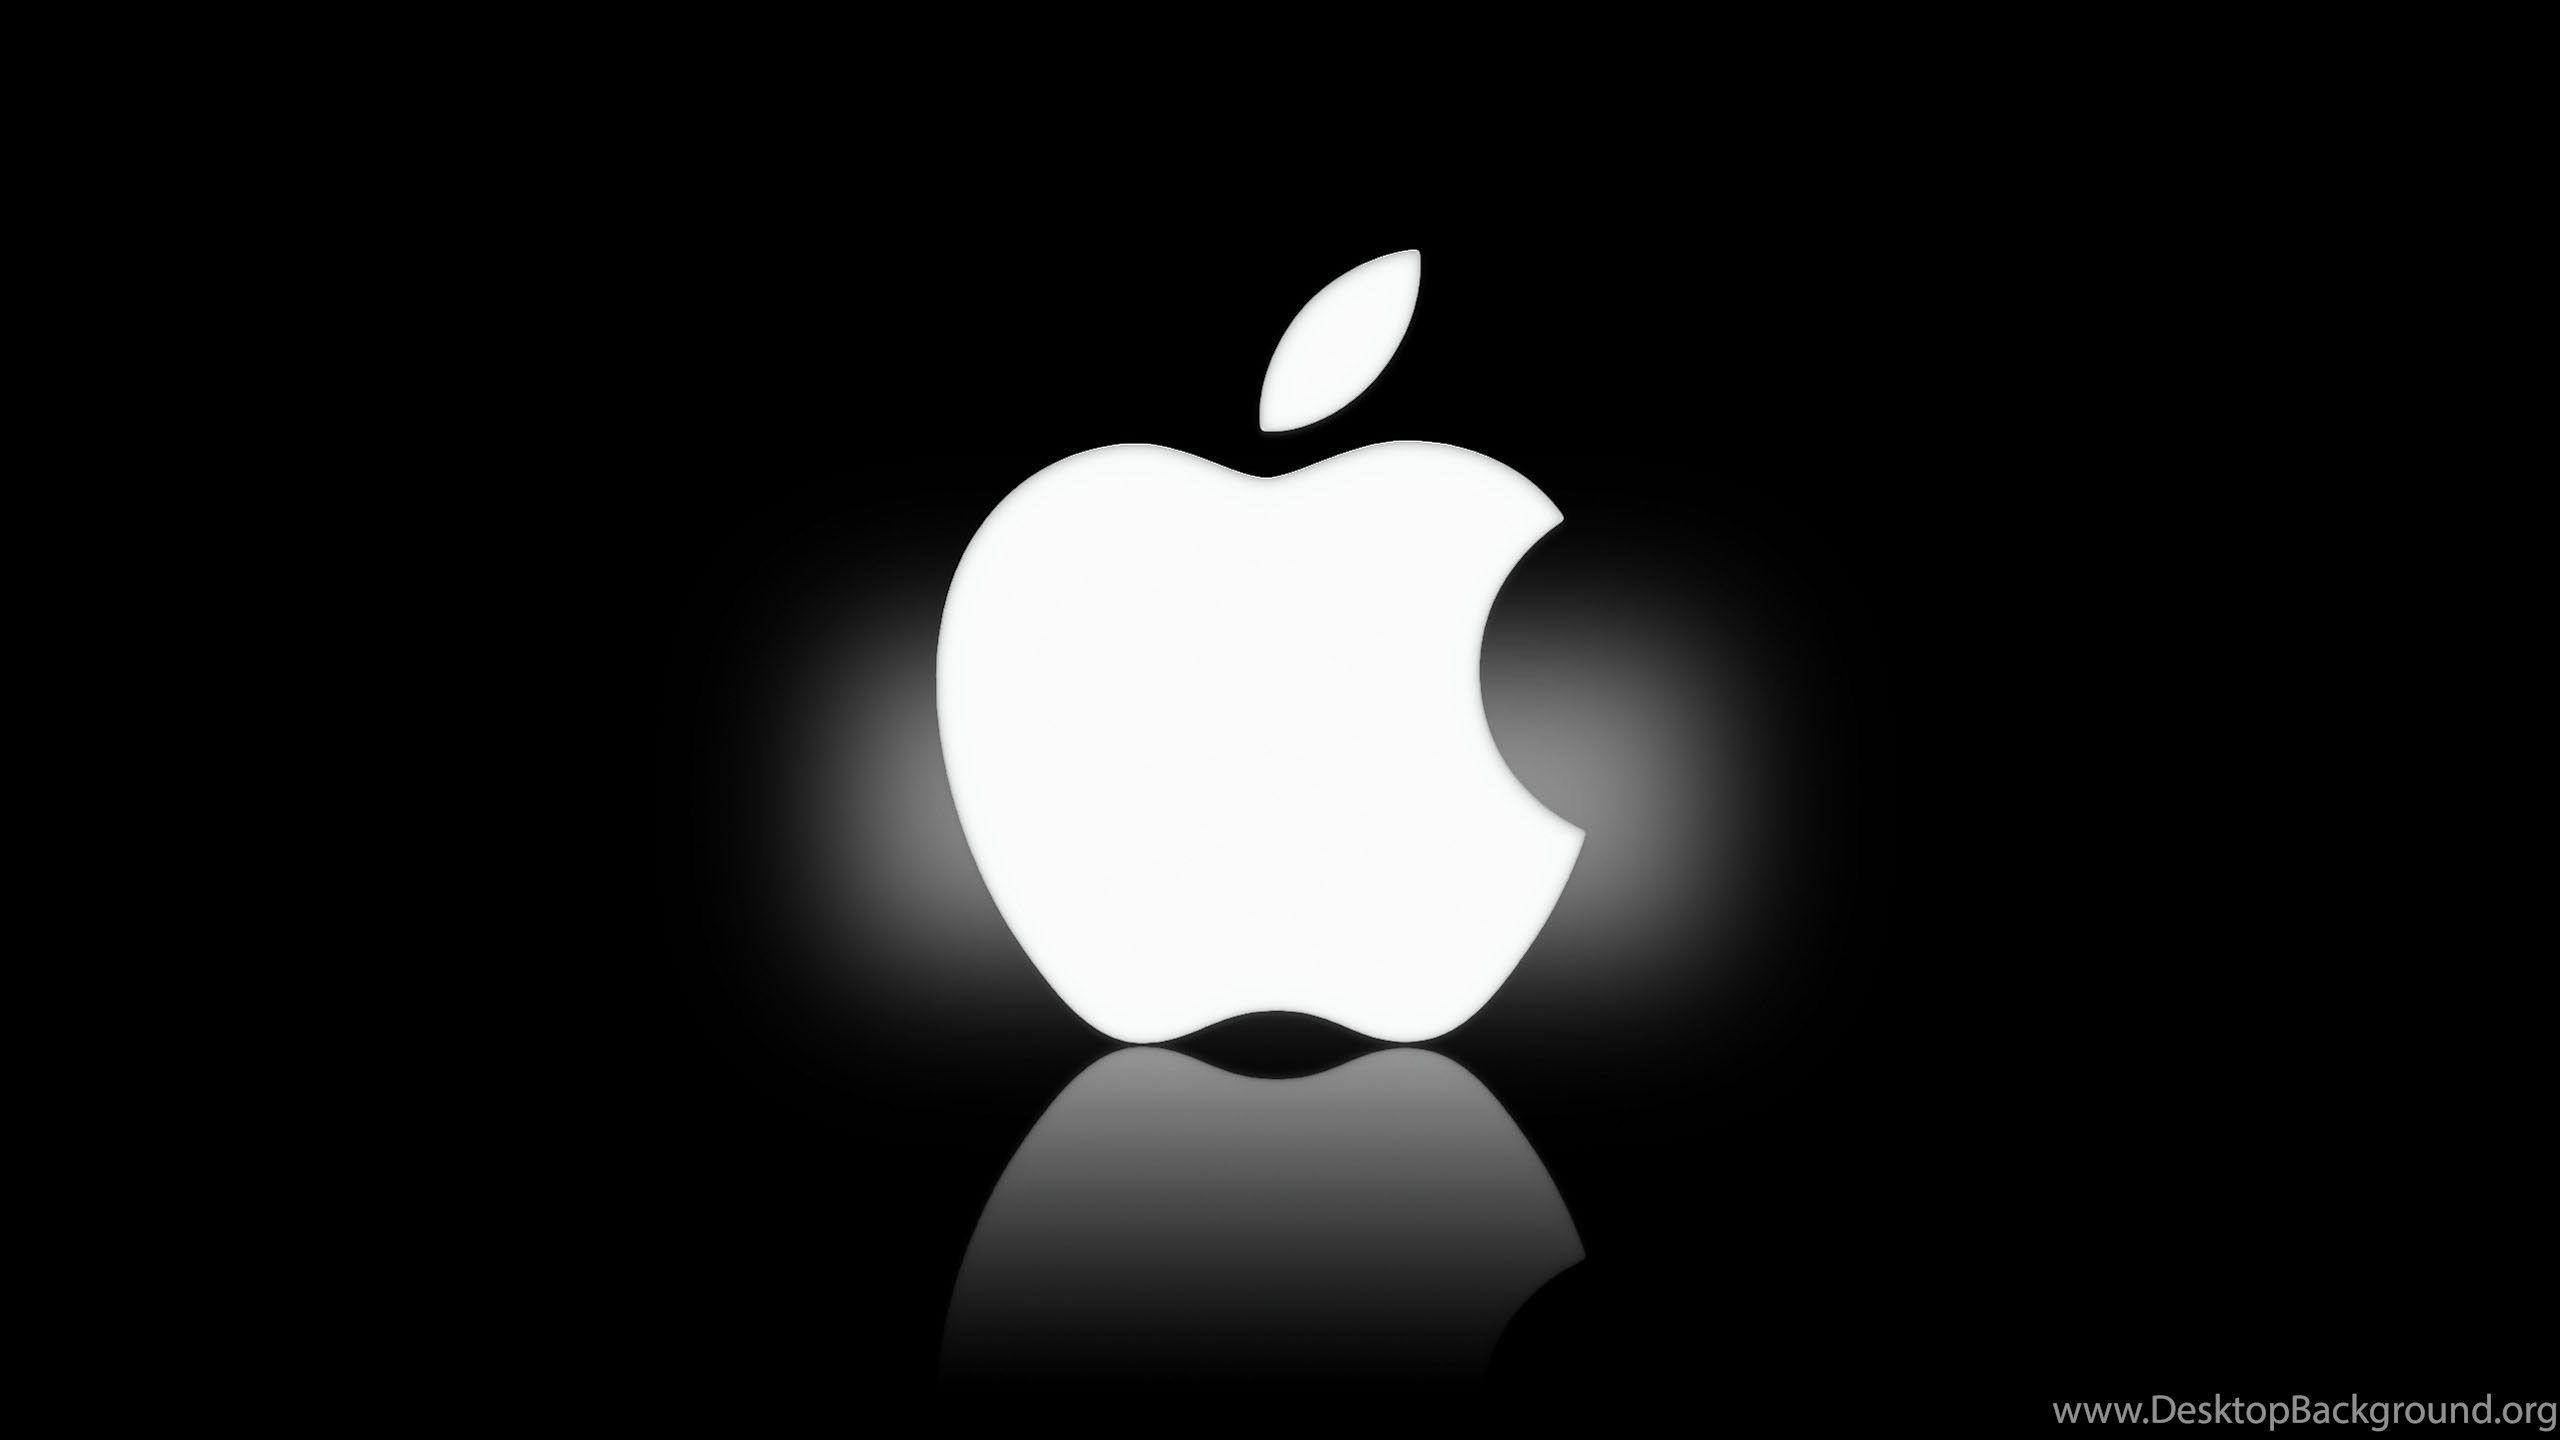 Black Apple Logo Wallpapers